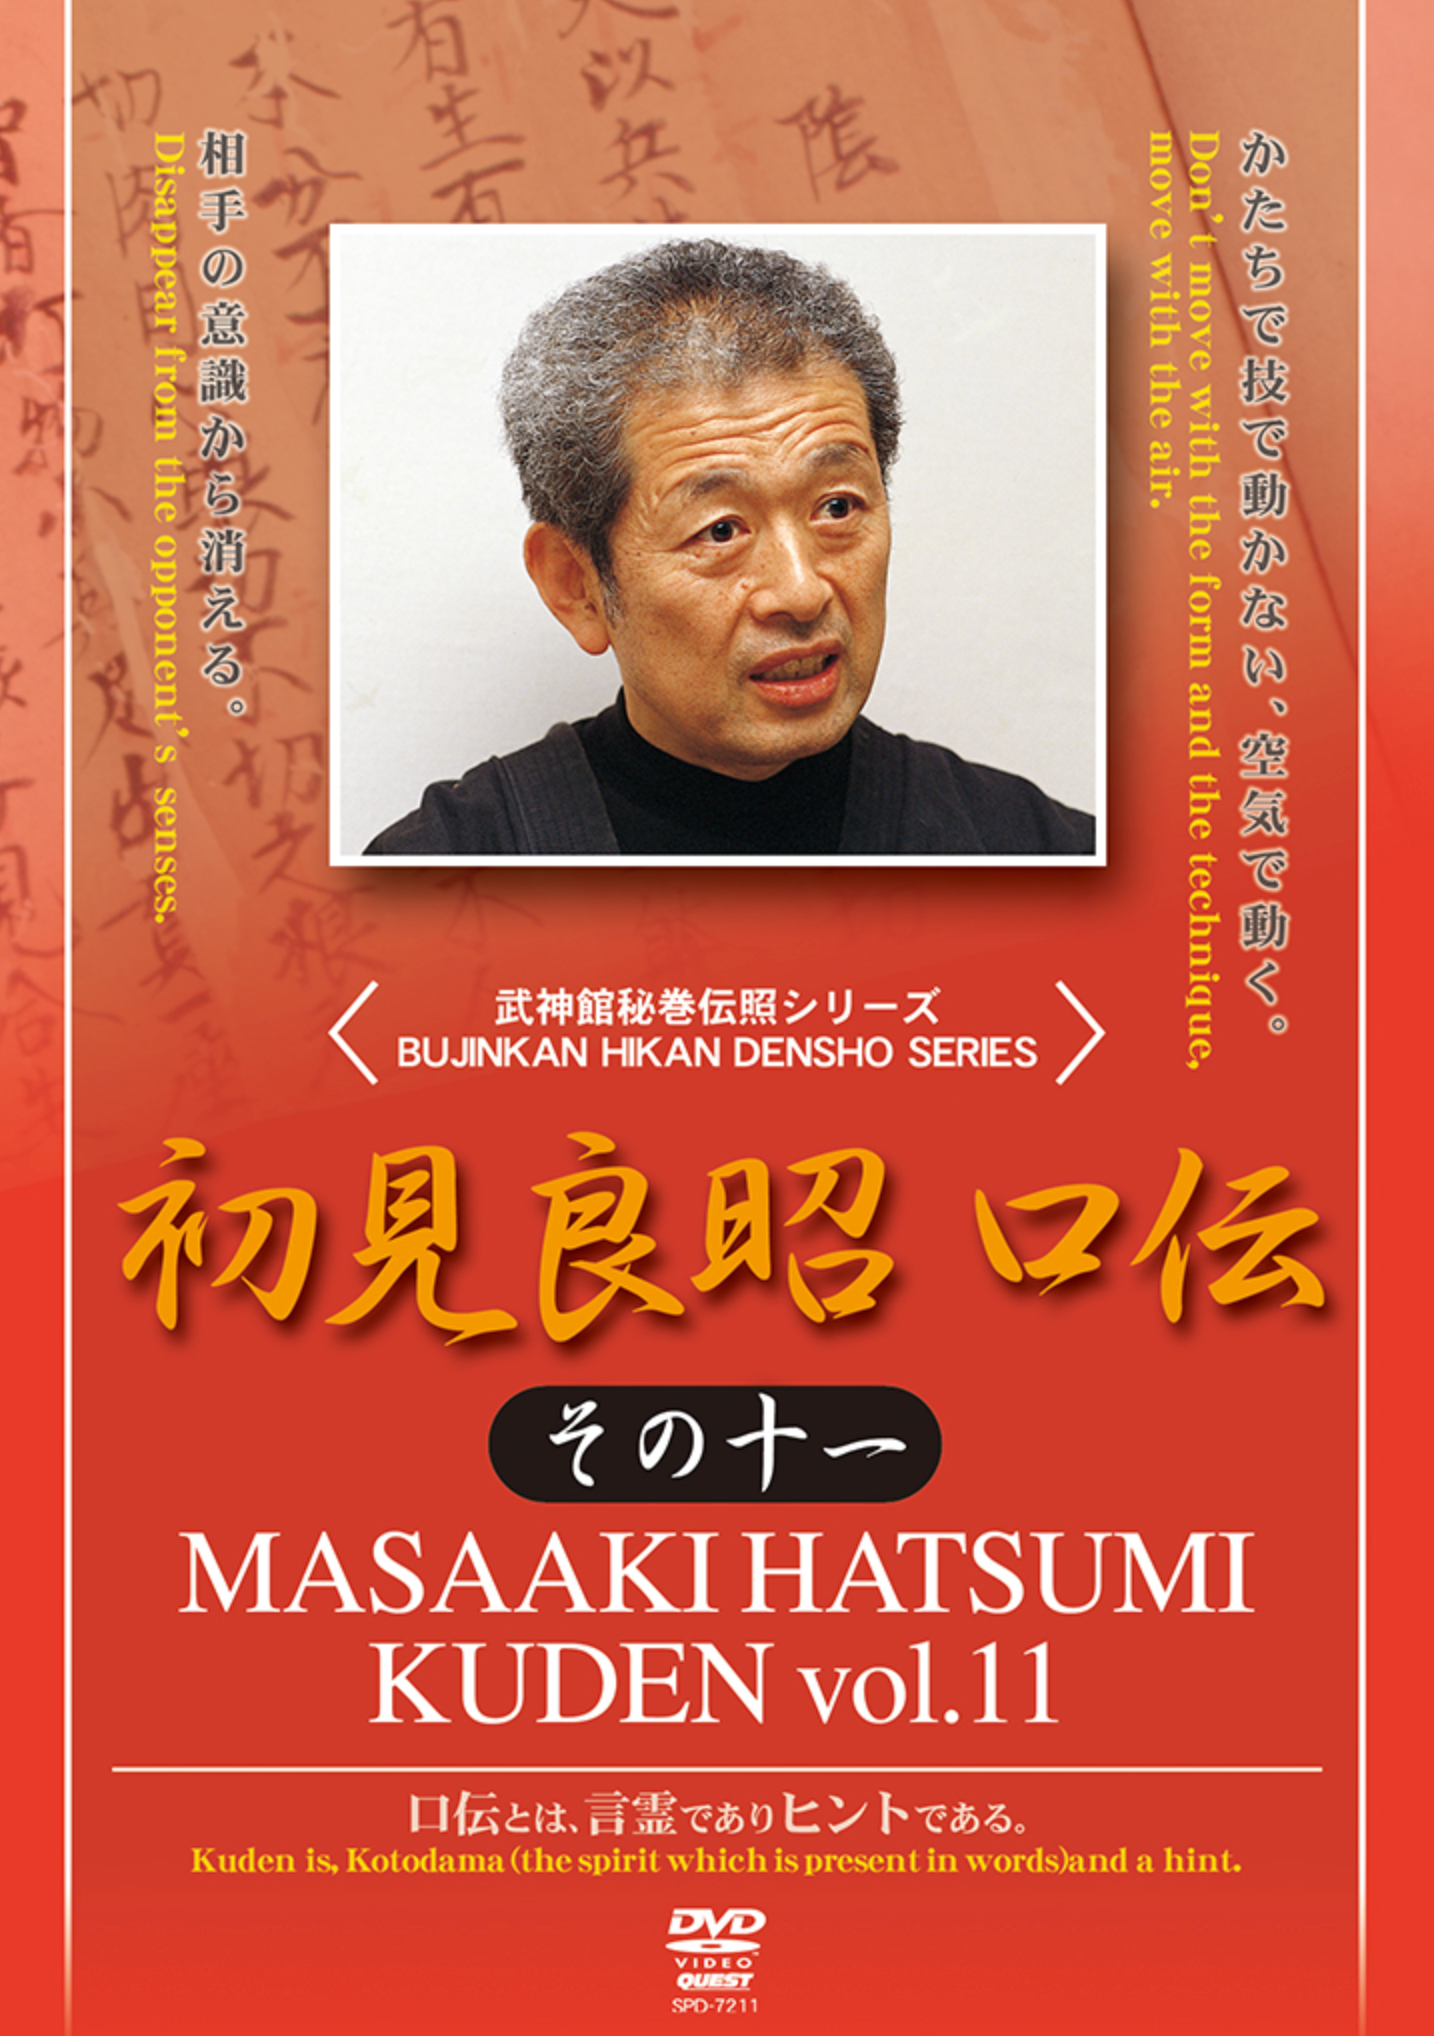 Kuden Vol 11 DVD with Masaaki Hatsumi - Budovideos Inc